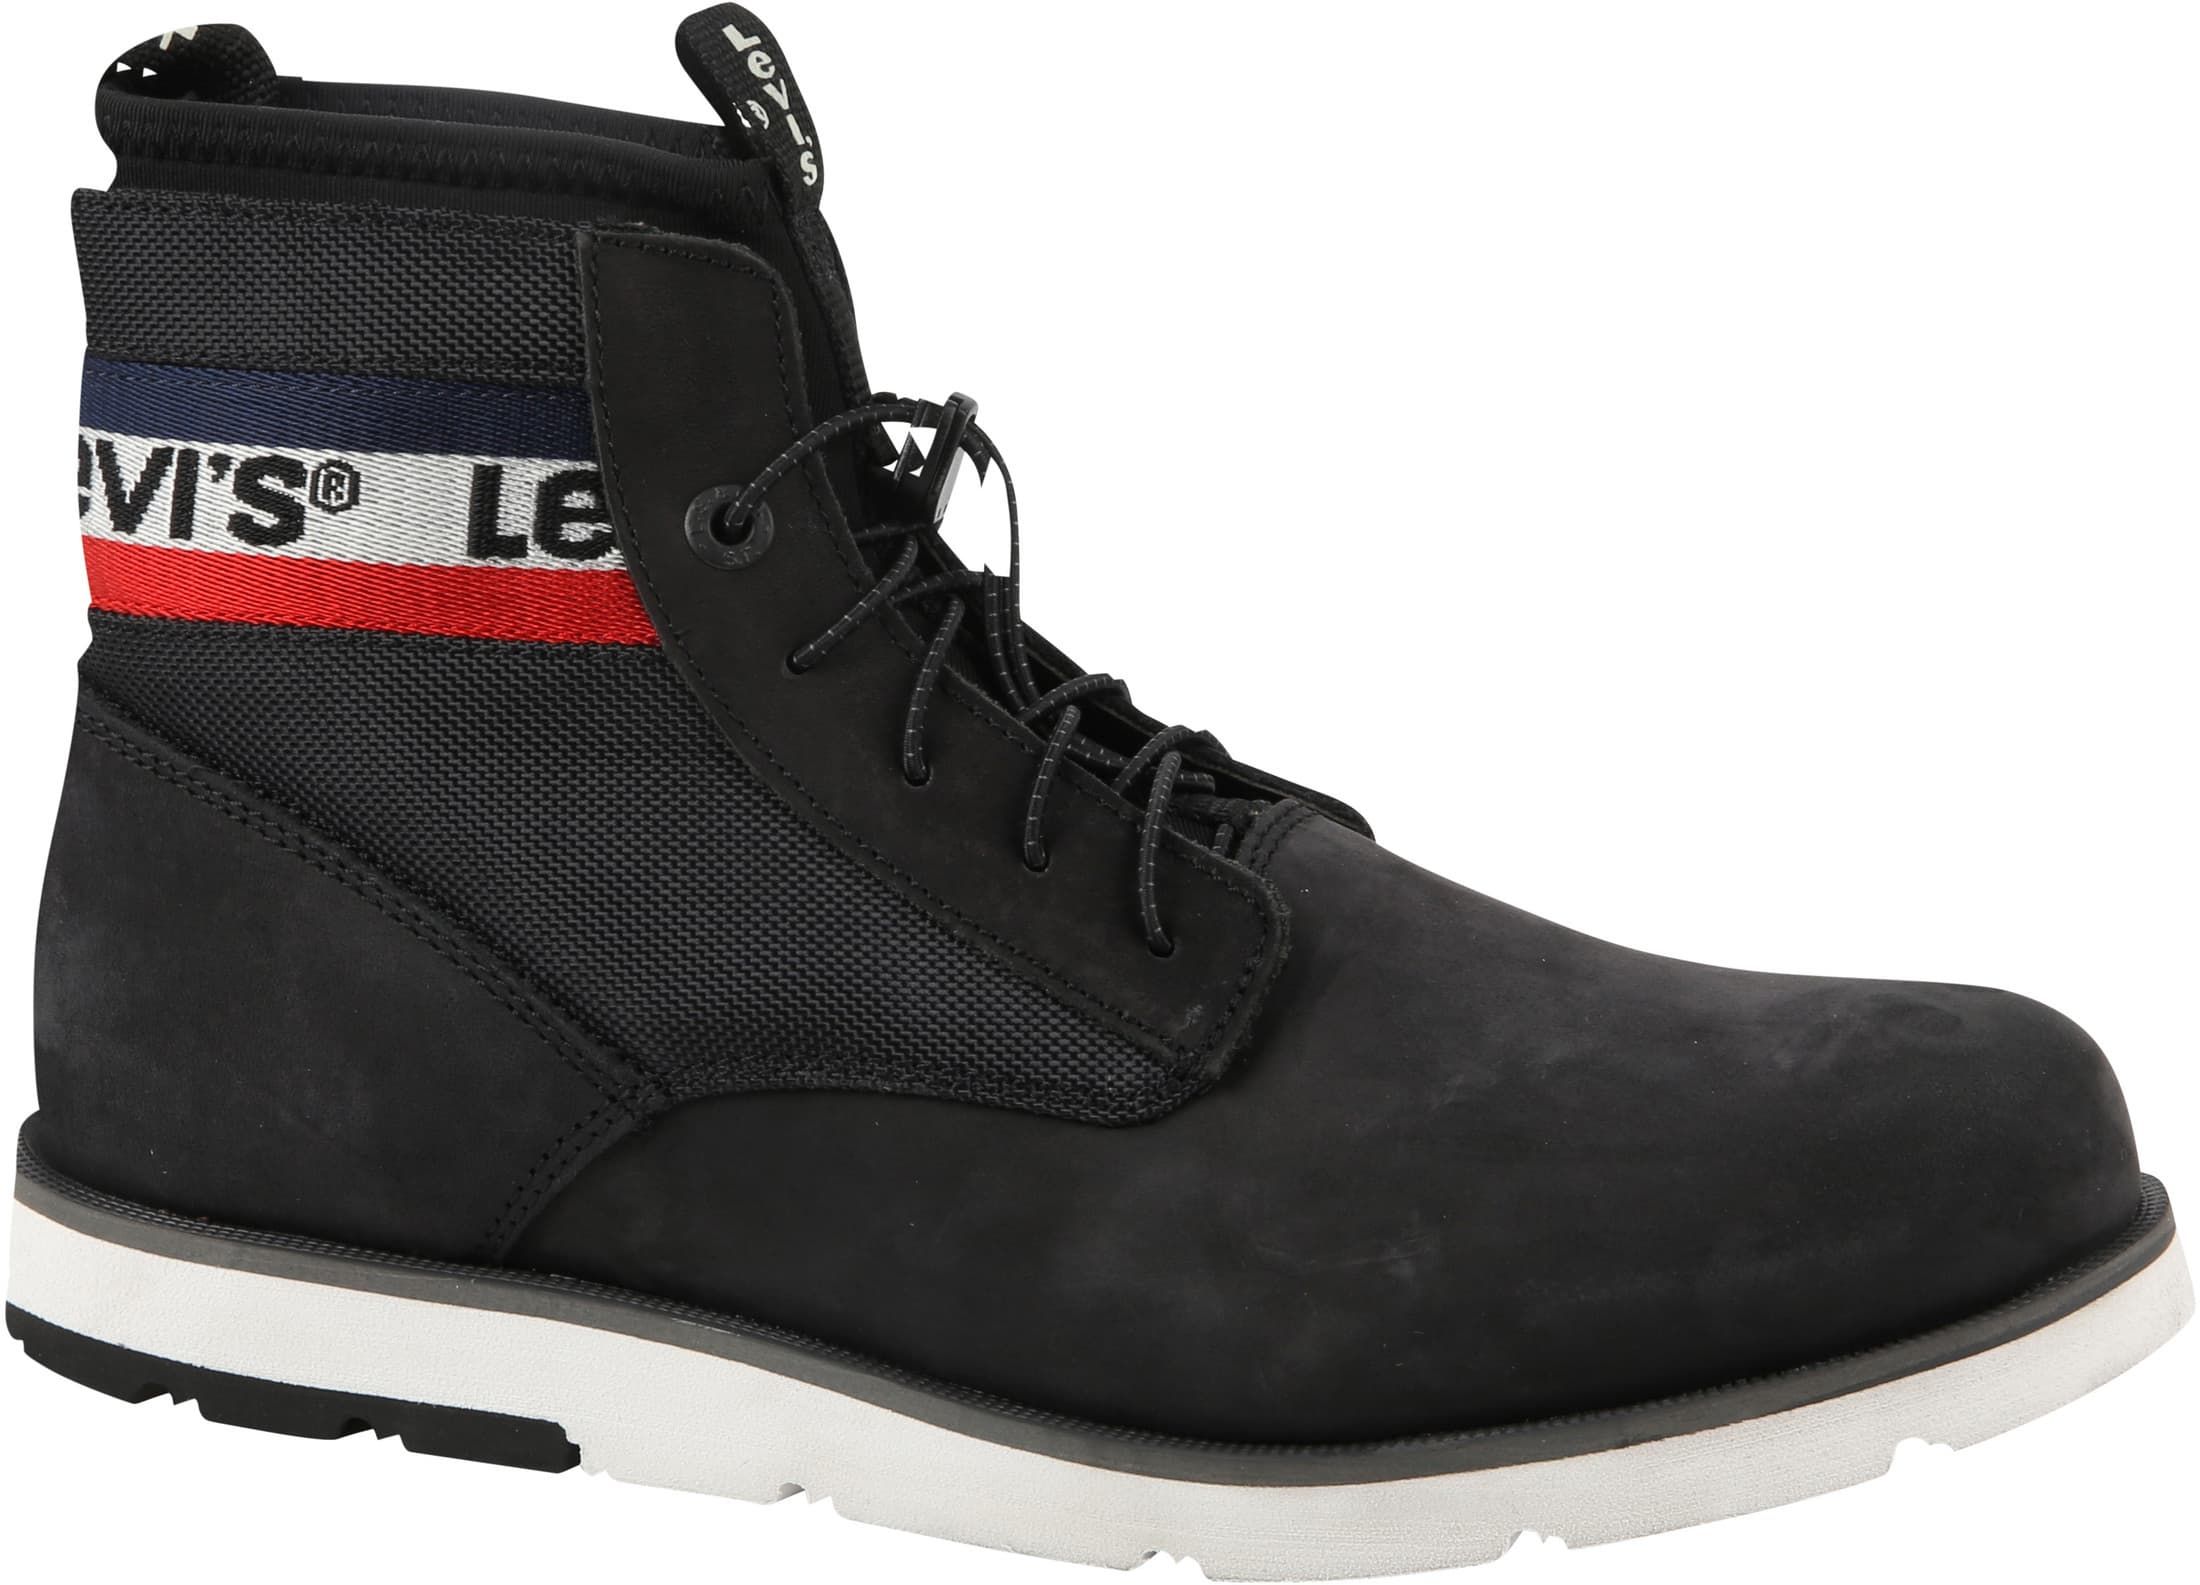 Levi's Jax Lite Boots Black size 12.5